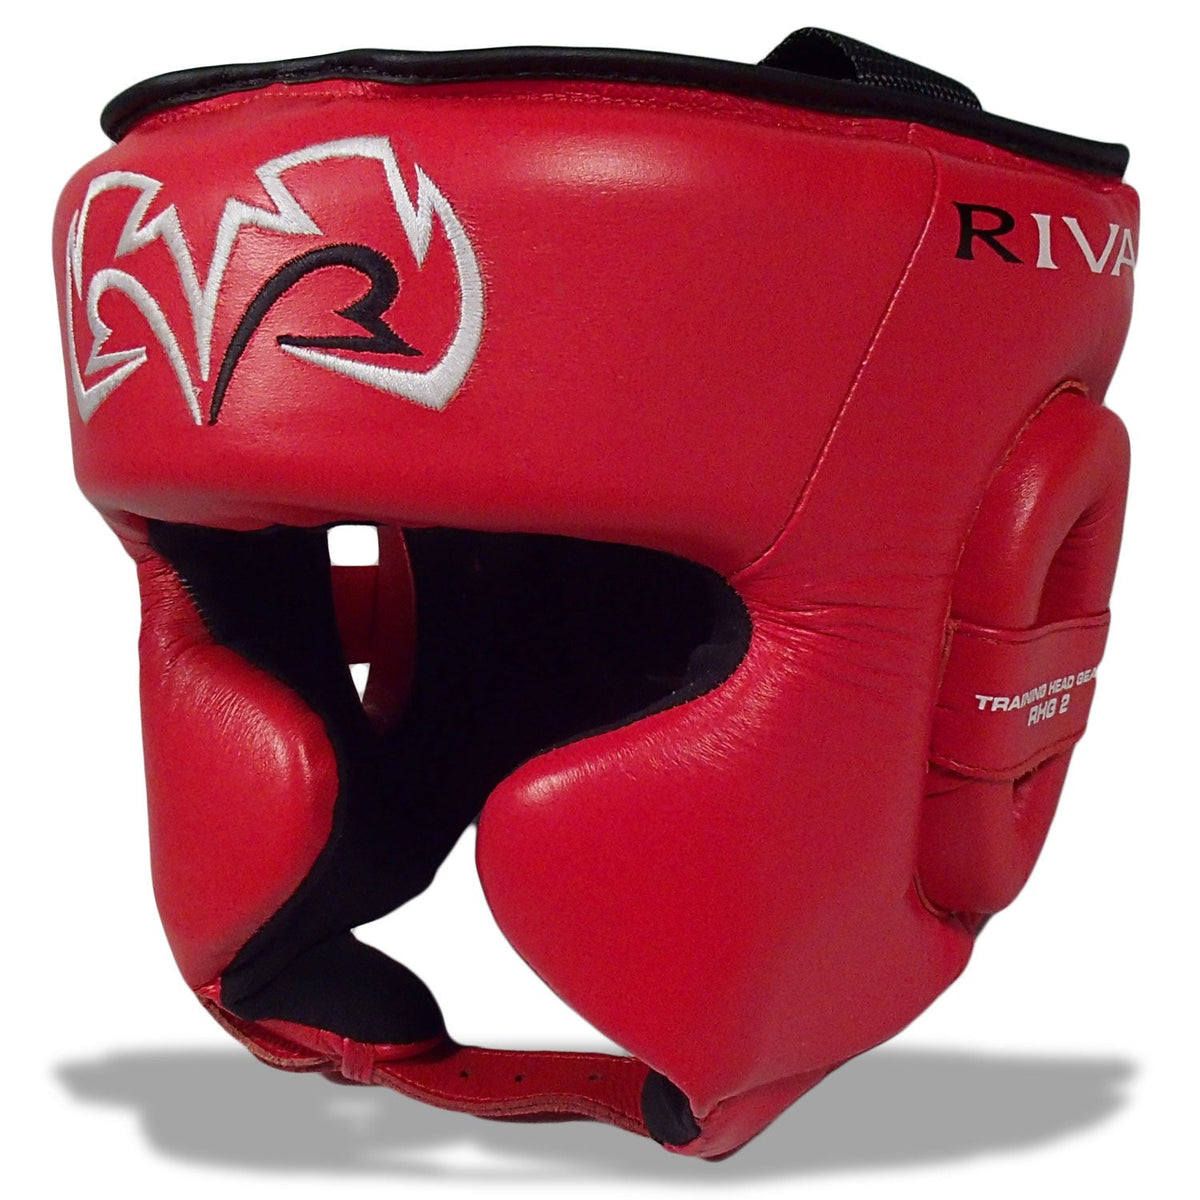 Casco Rival de boxeo con barra protectora RHGFS3 rojo